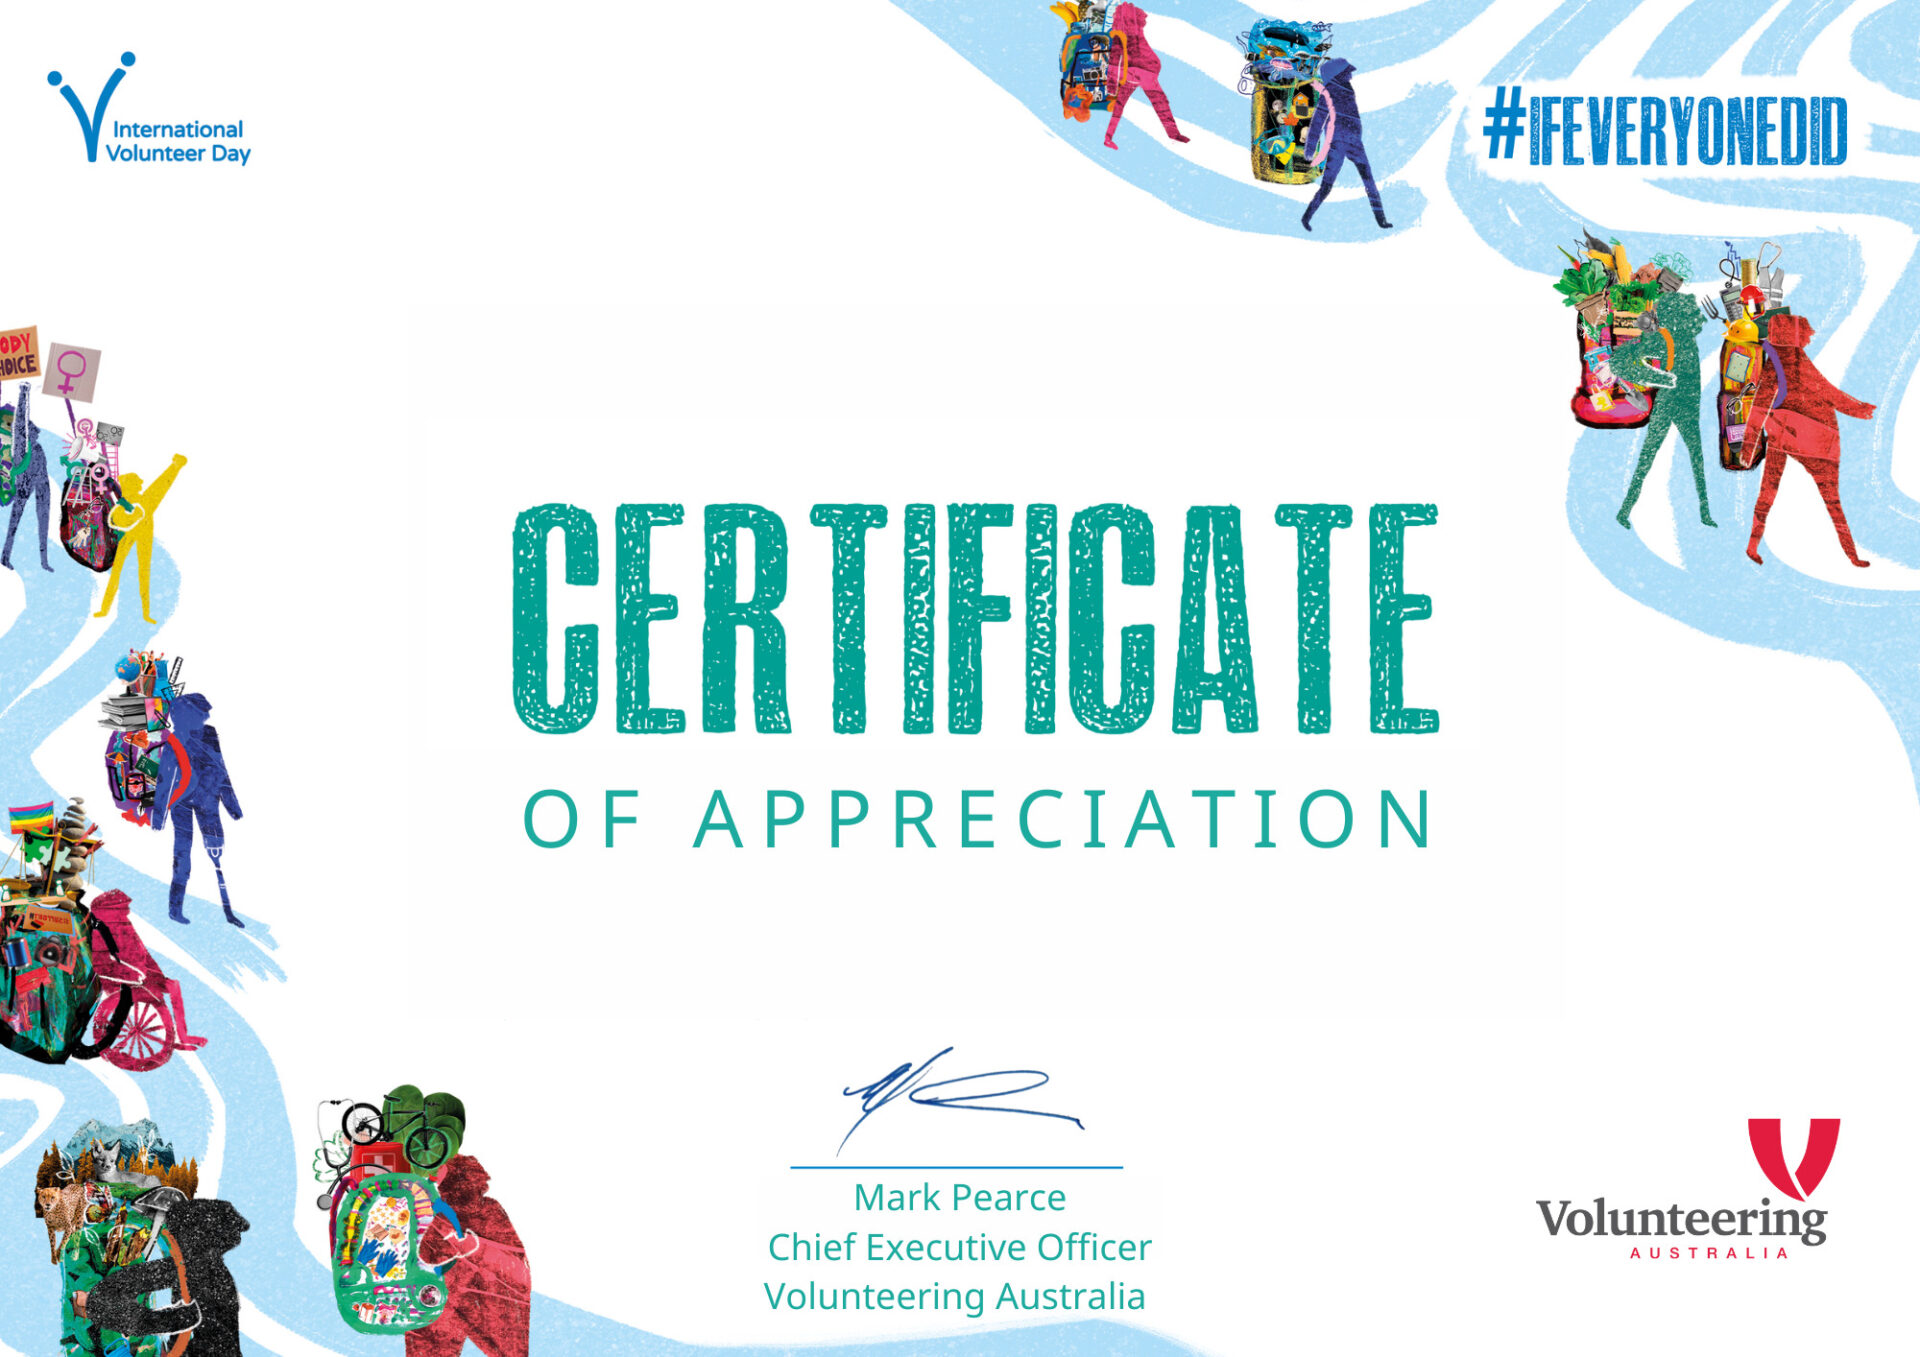 Certificate of Appreciation with signature from Mark Pearce CEO of Volunteering Australia. International Volunteer Day Logo and Volunteering Australia Logo. #IfEveryoneDid